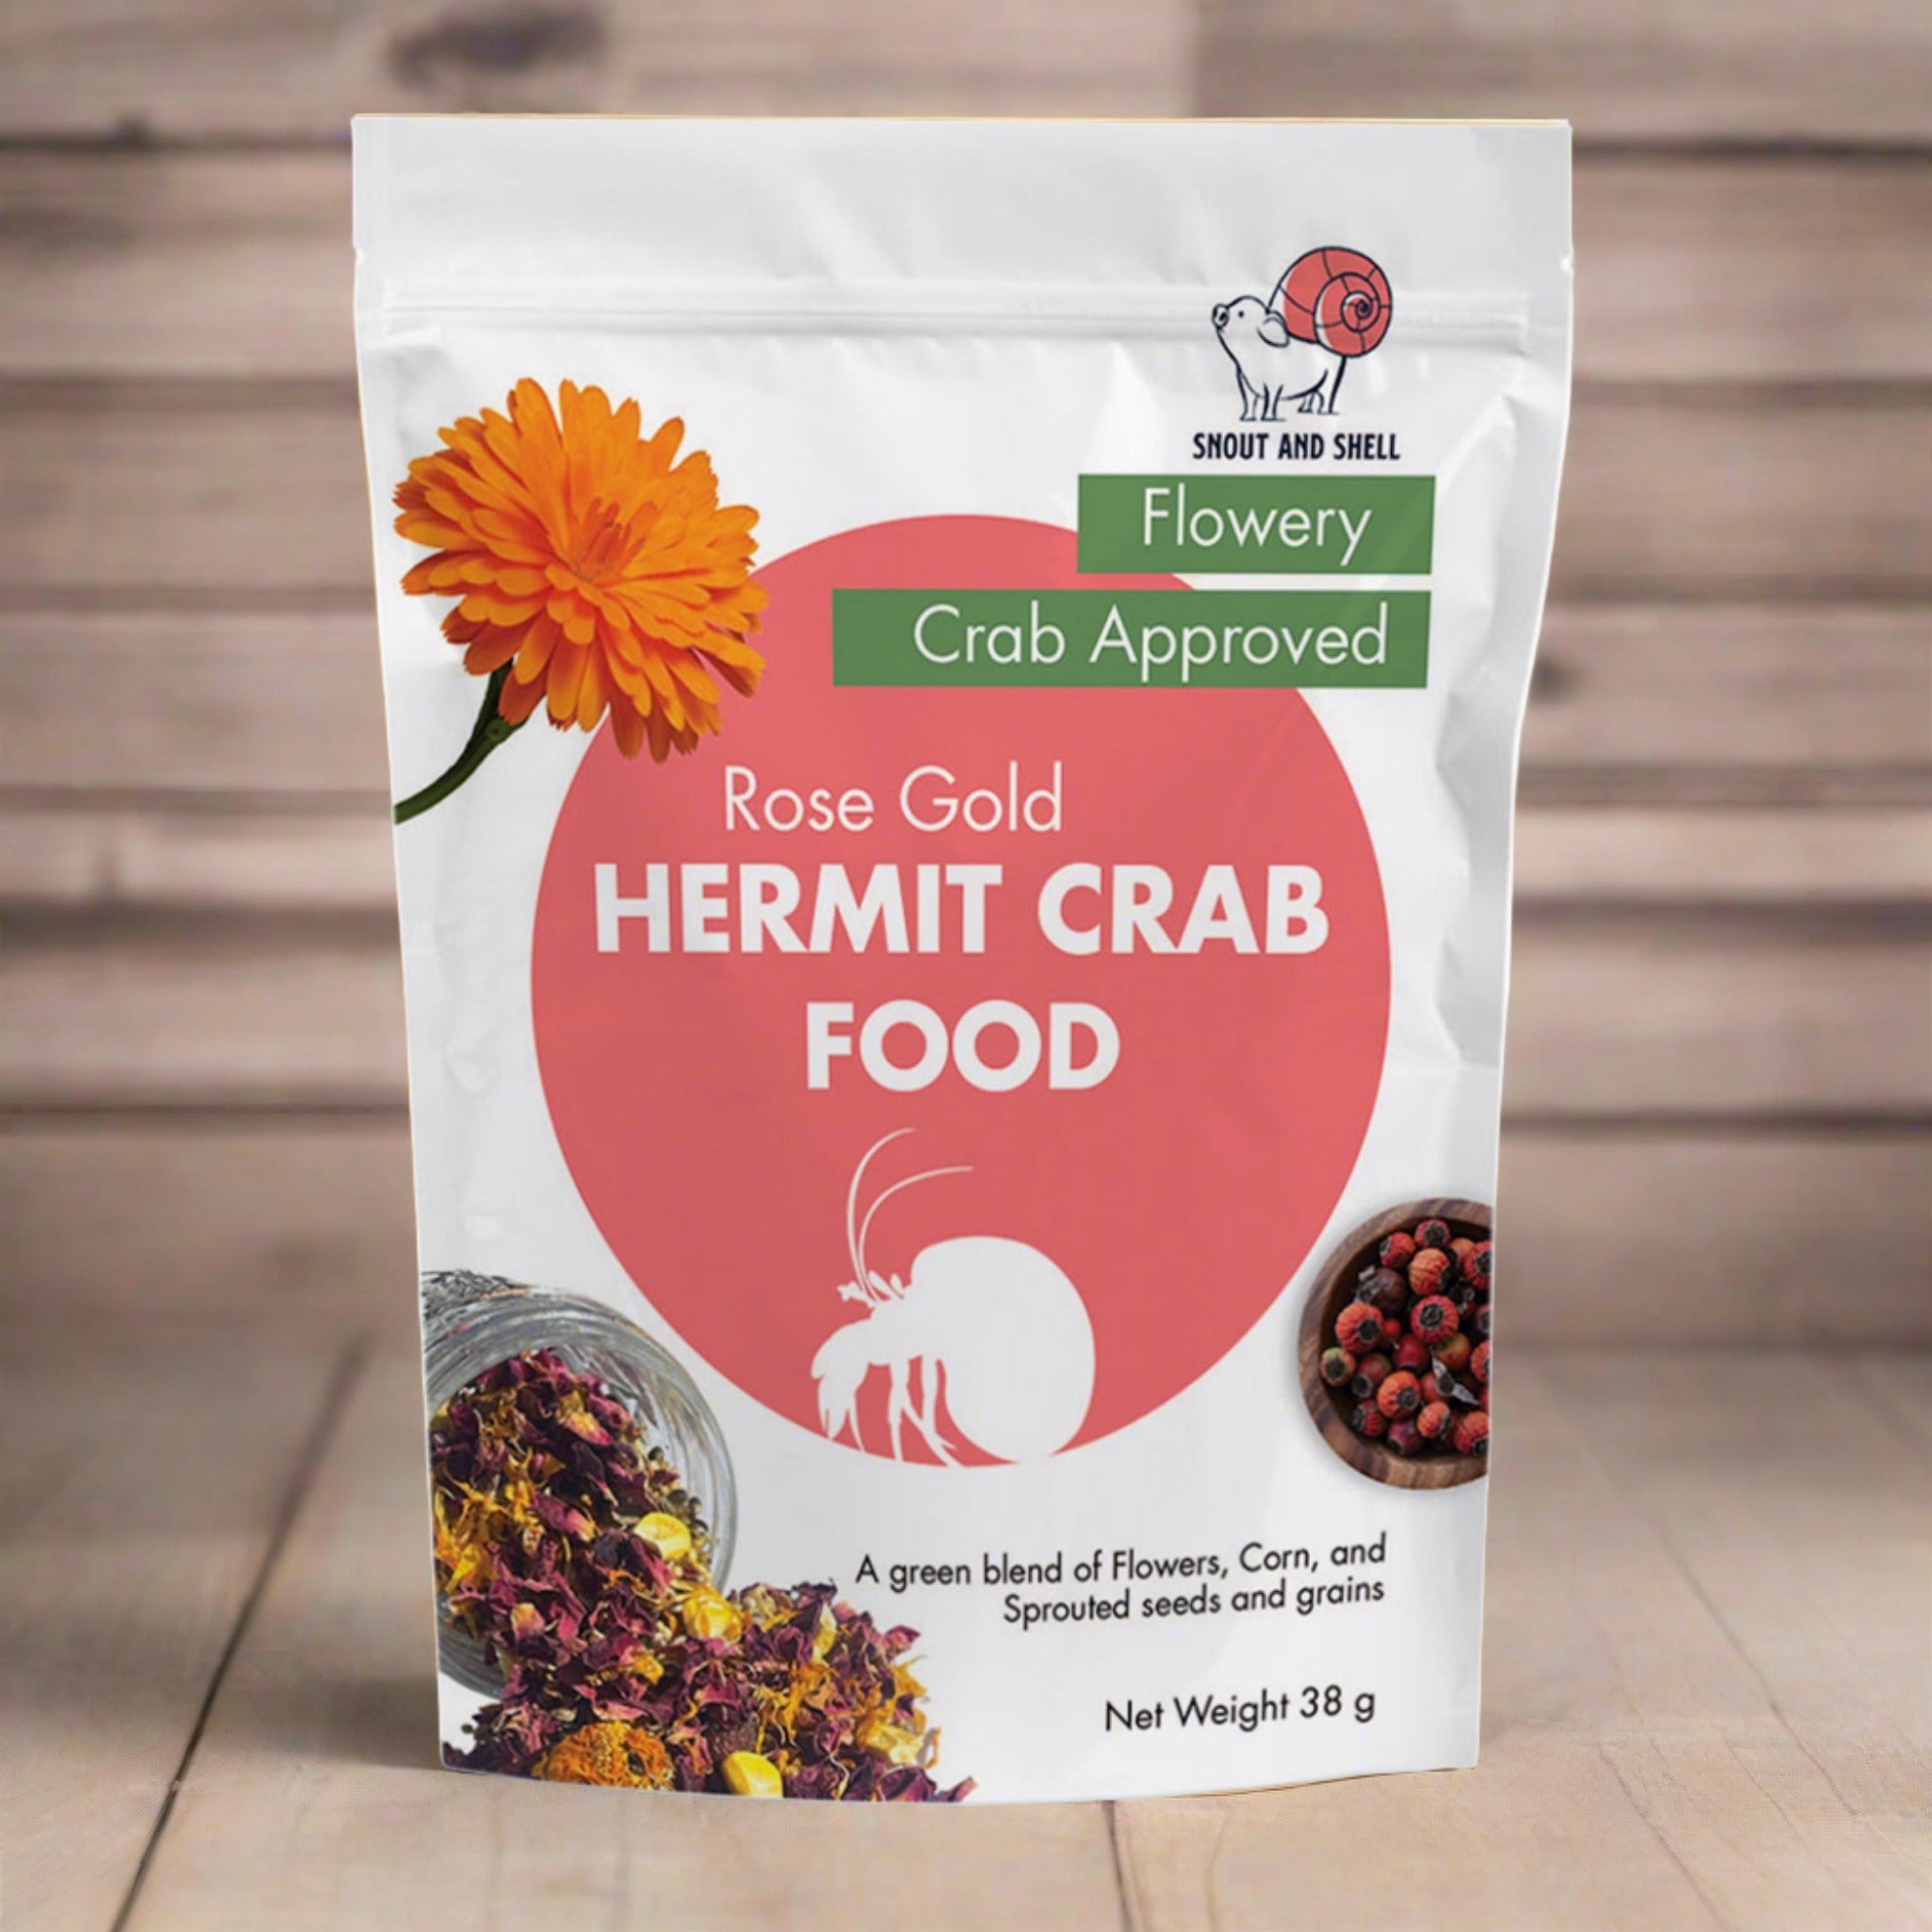 Rose Gold hermit crab food